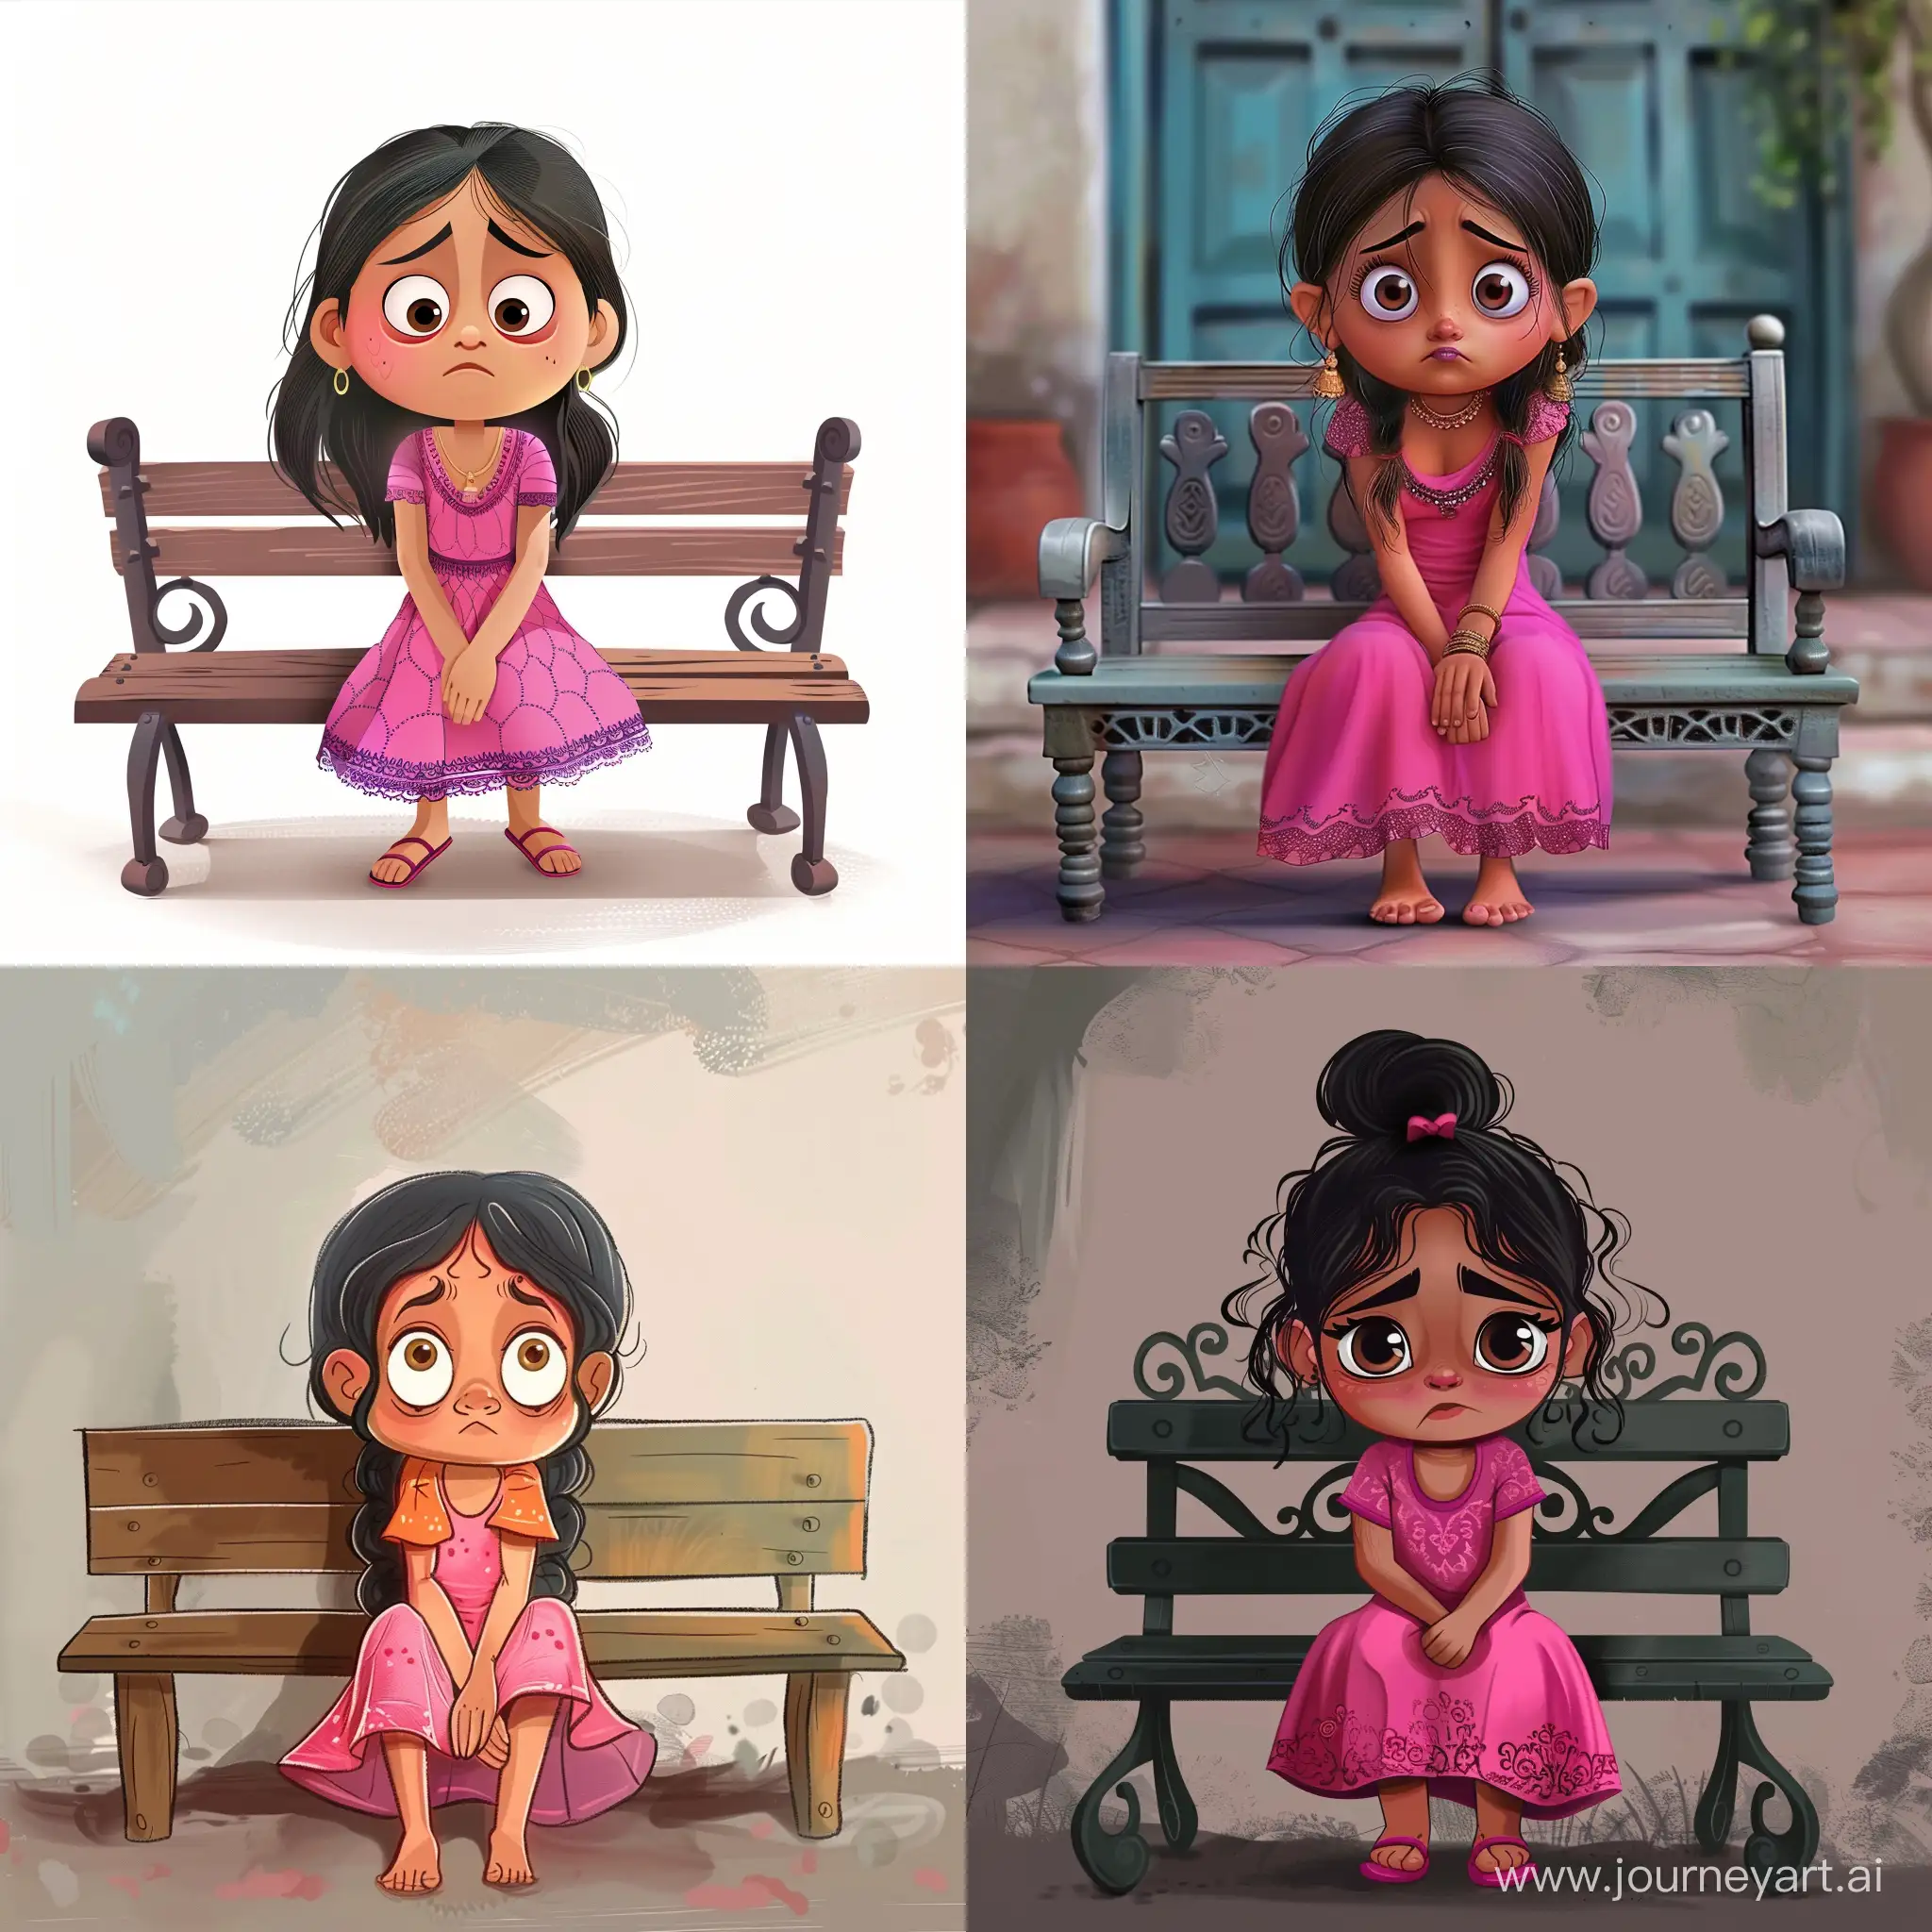 Sad-Nepali-Girl-in-Pink-Dress-Sitting-on-Bench